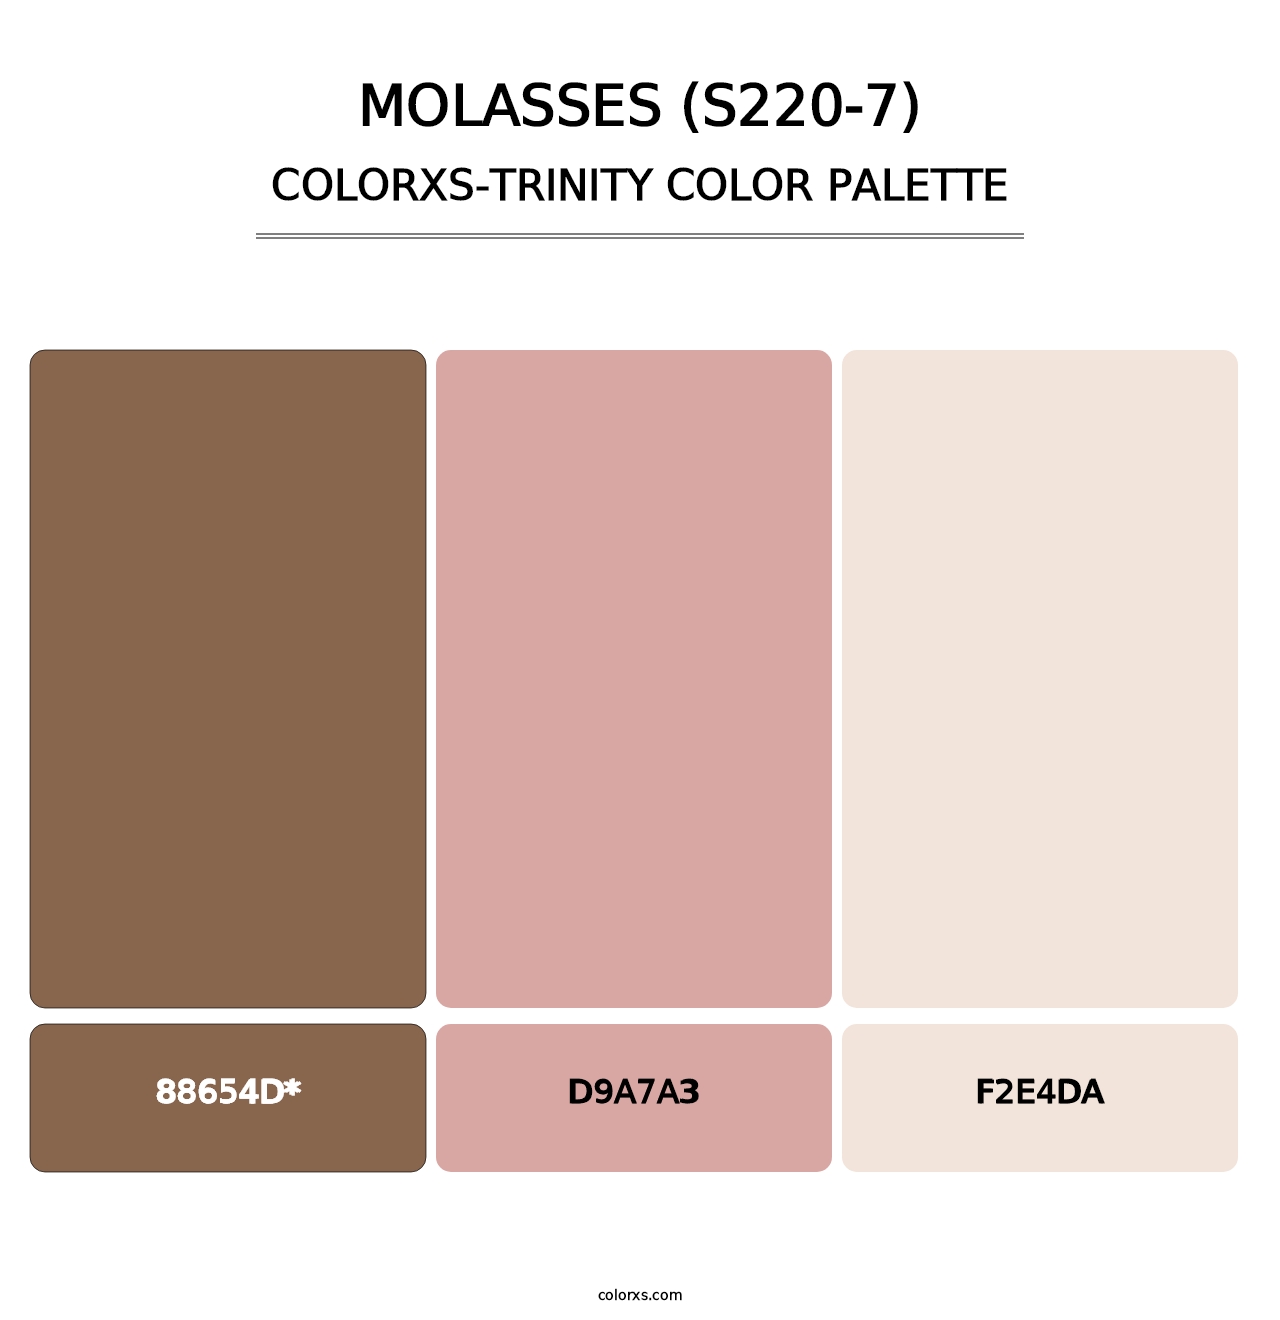 Molasses (S220-7) - Colorxs Trinity Palette